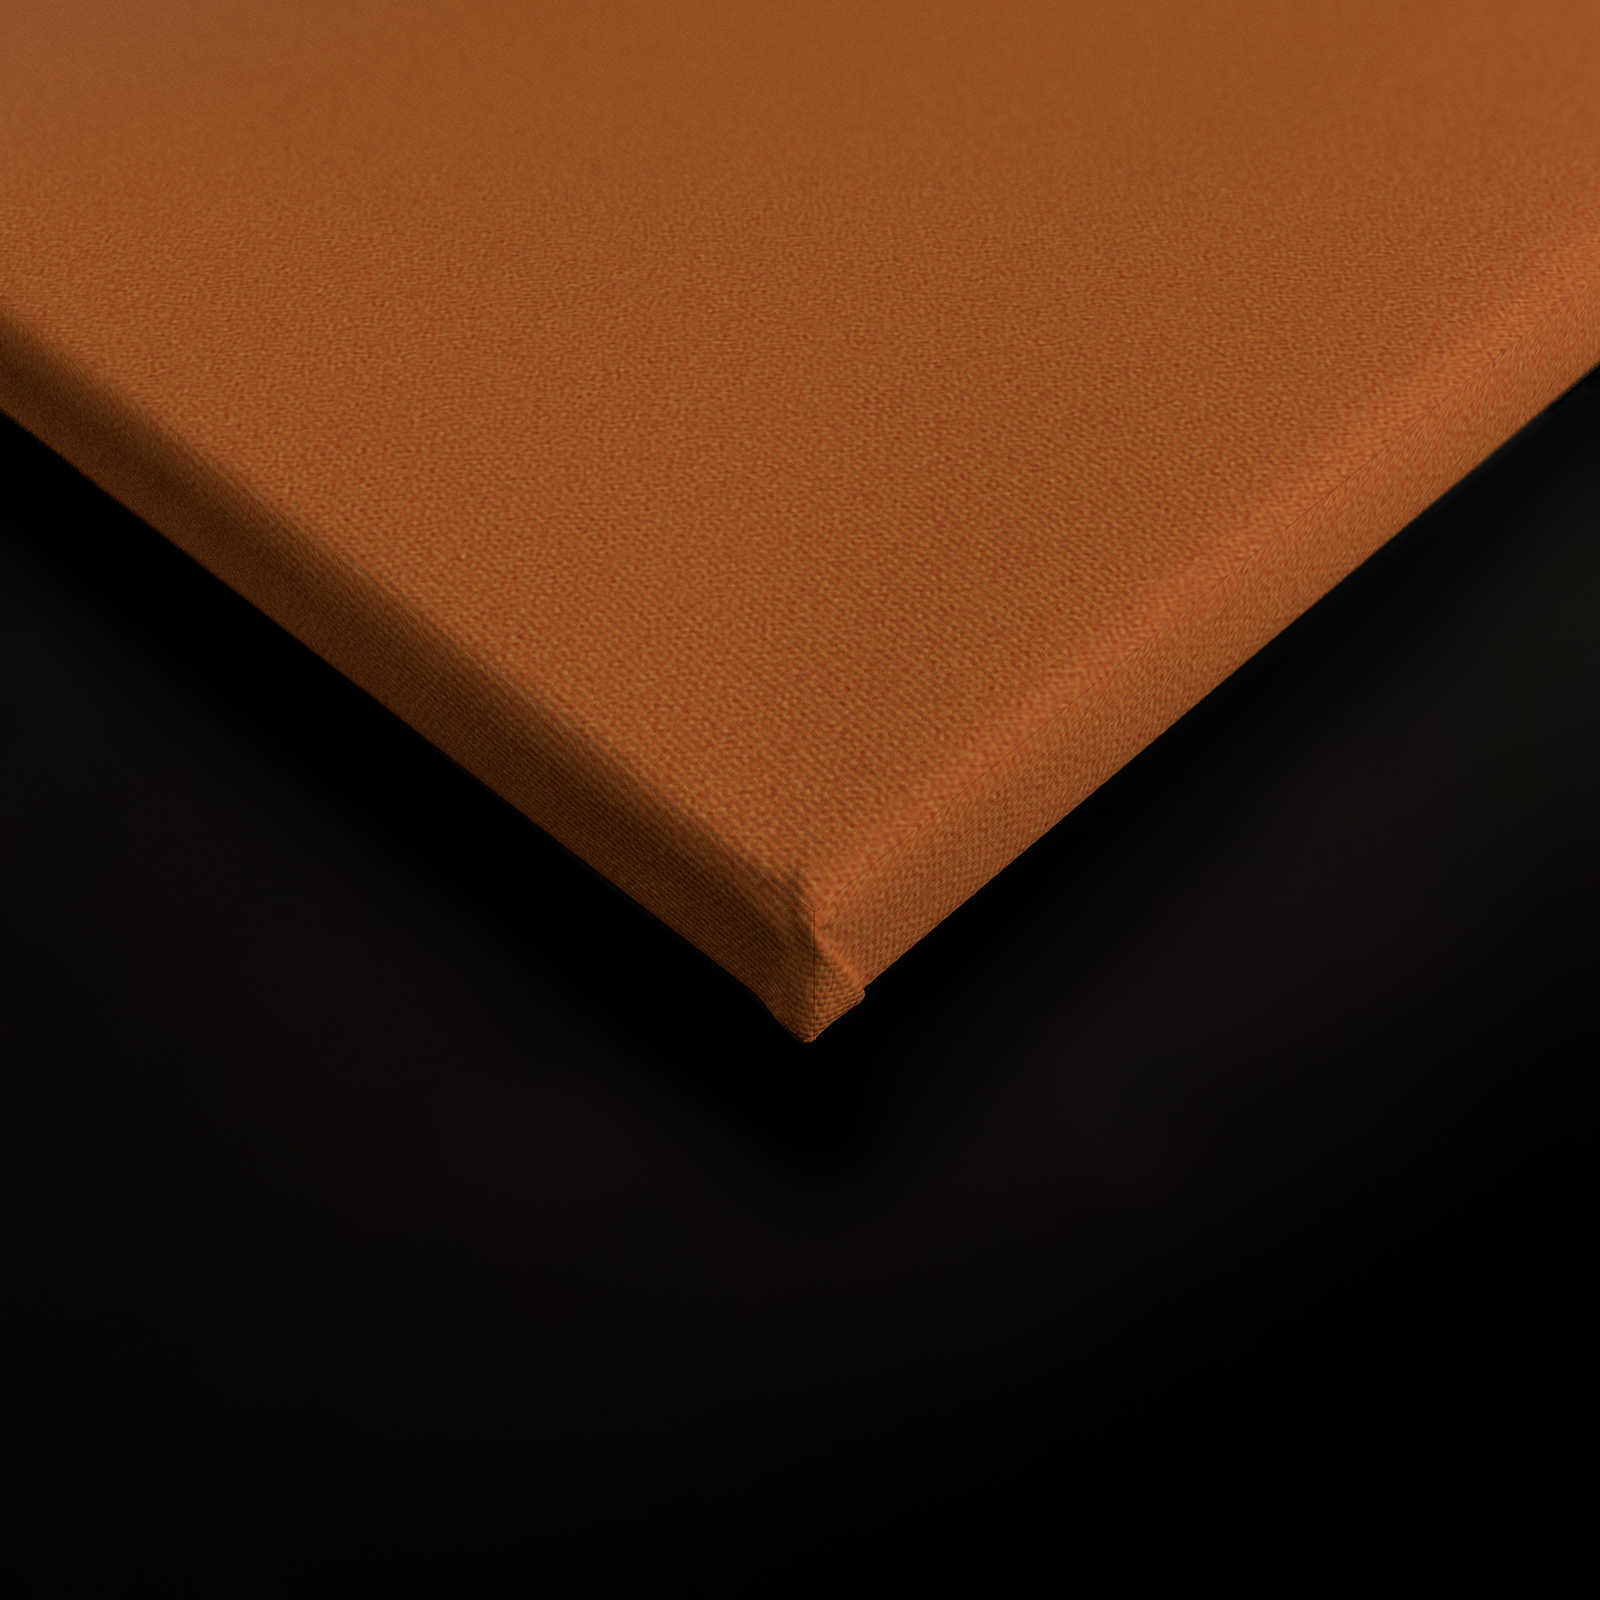             Colour Studio 4 - Ombre Leinwandbild Farbverlauf Rosa & Orange – 1,20 m x 0,80 m
        